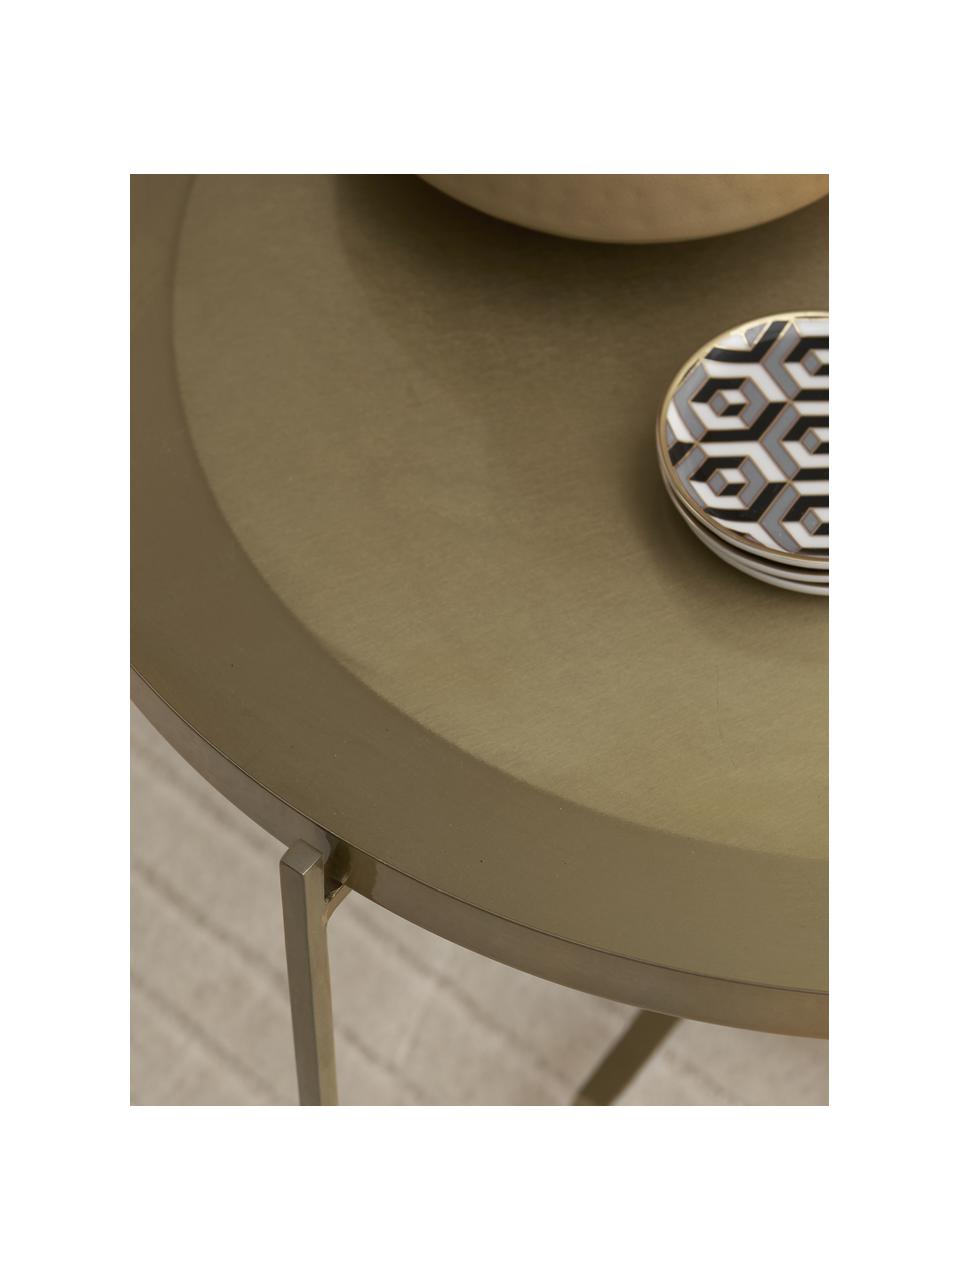 Kulatý kovový odkládací stolek George, Potažený kov, Zlatá, Ø 57 cm, V 48 cm